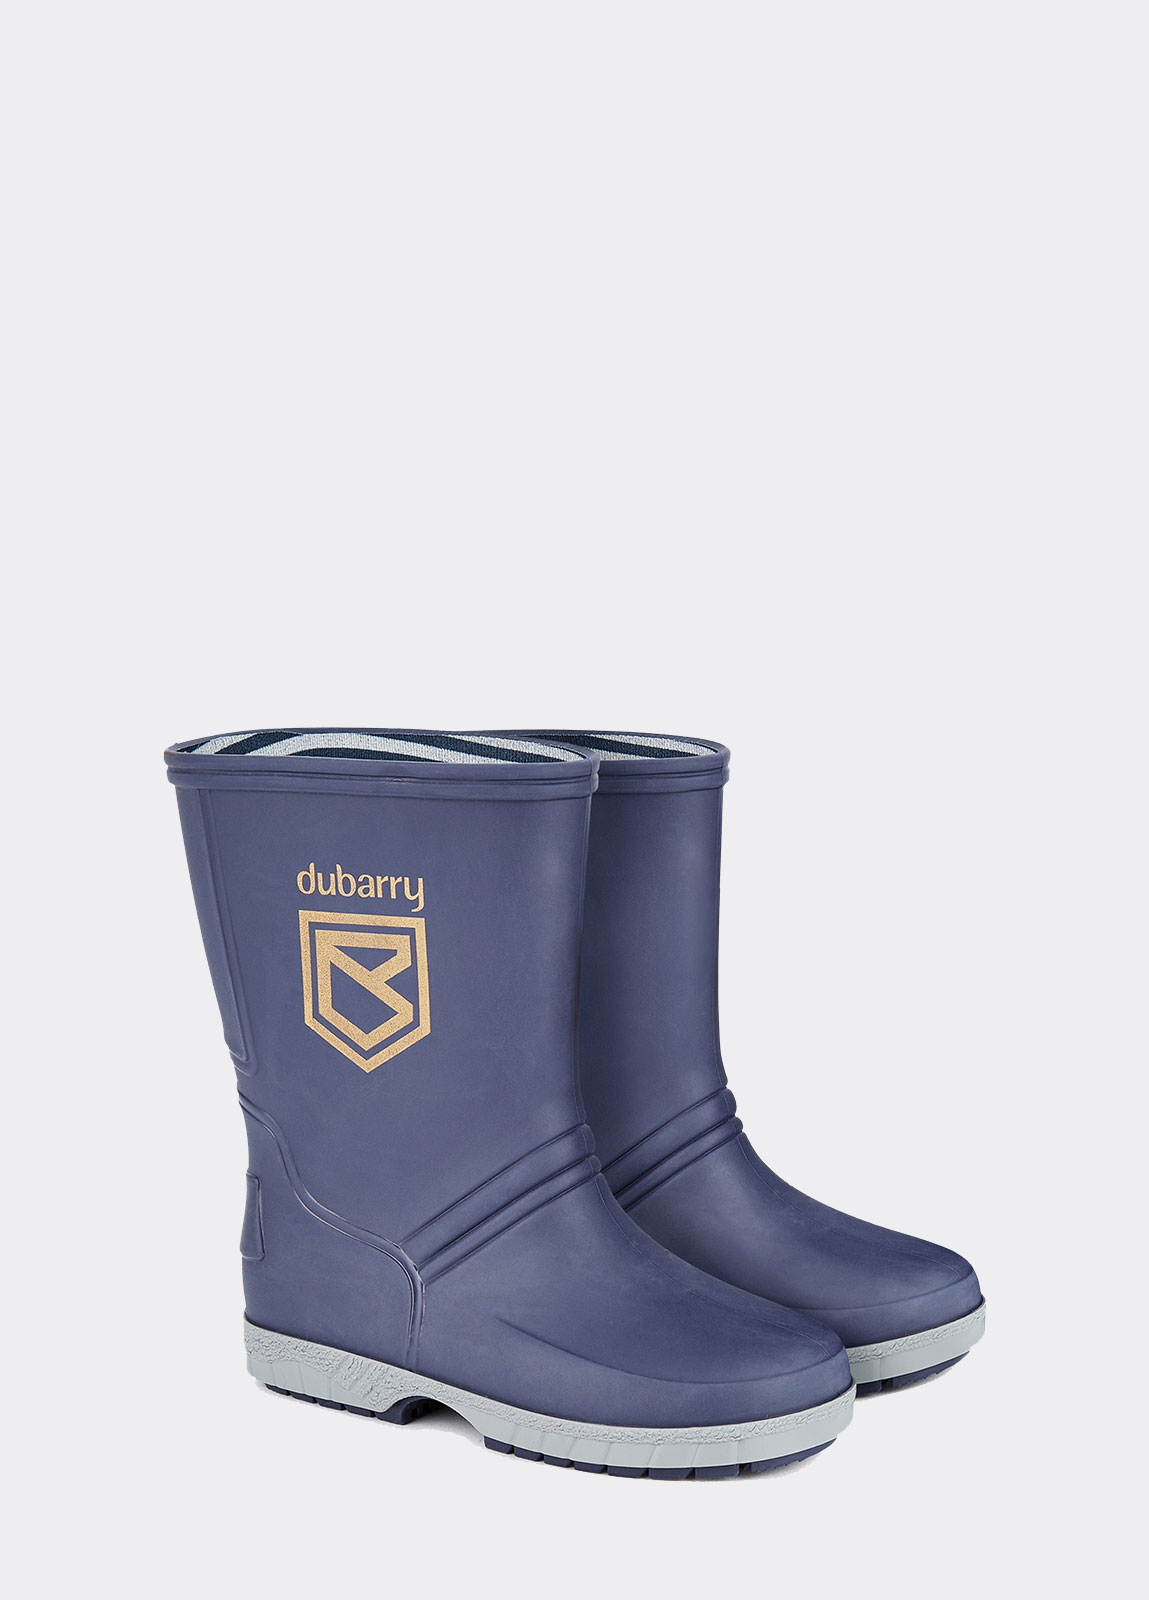 Splash Kids Boot - Navy - Size EU 23/24